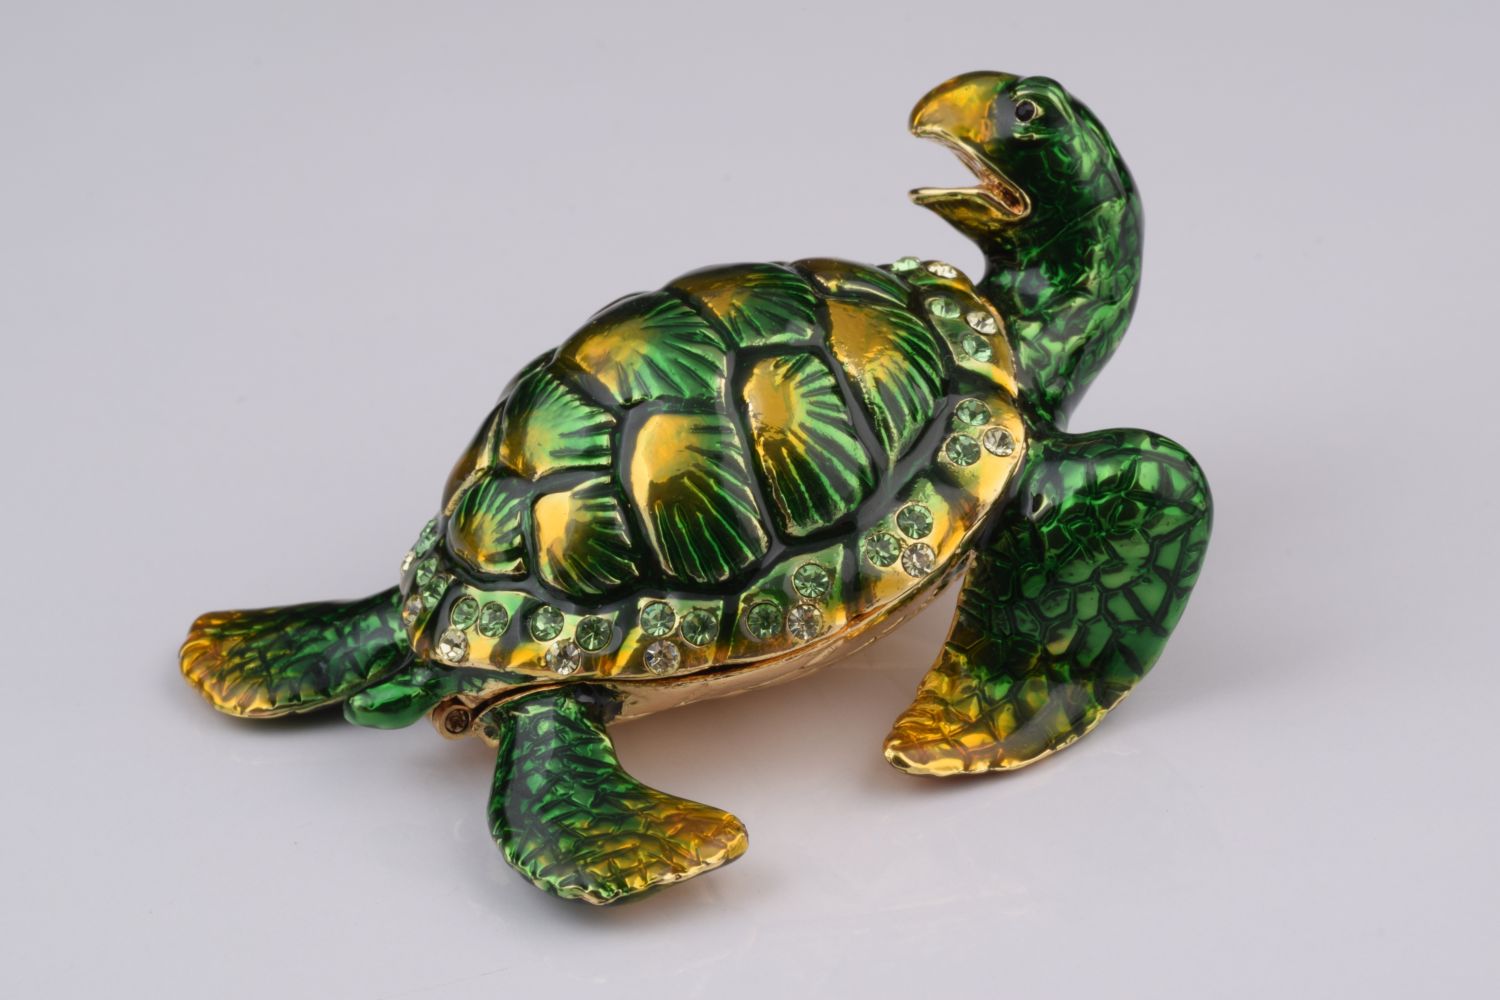 Keren Kopal Green Turtle Mother and Son  71.50